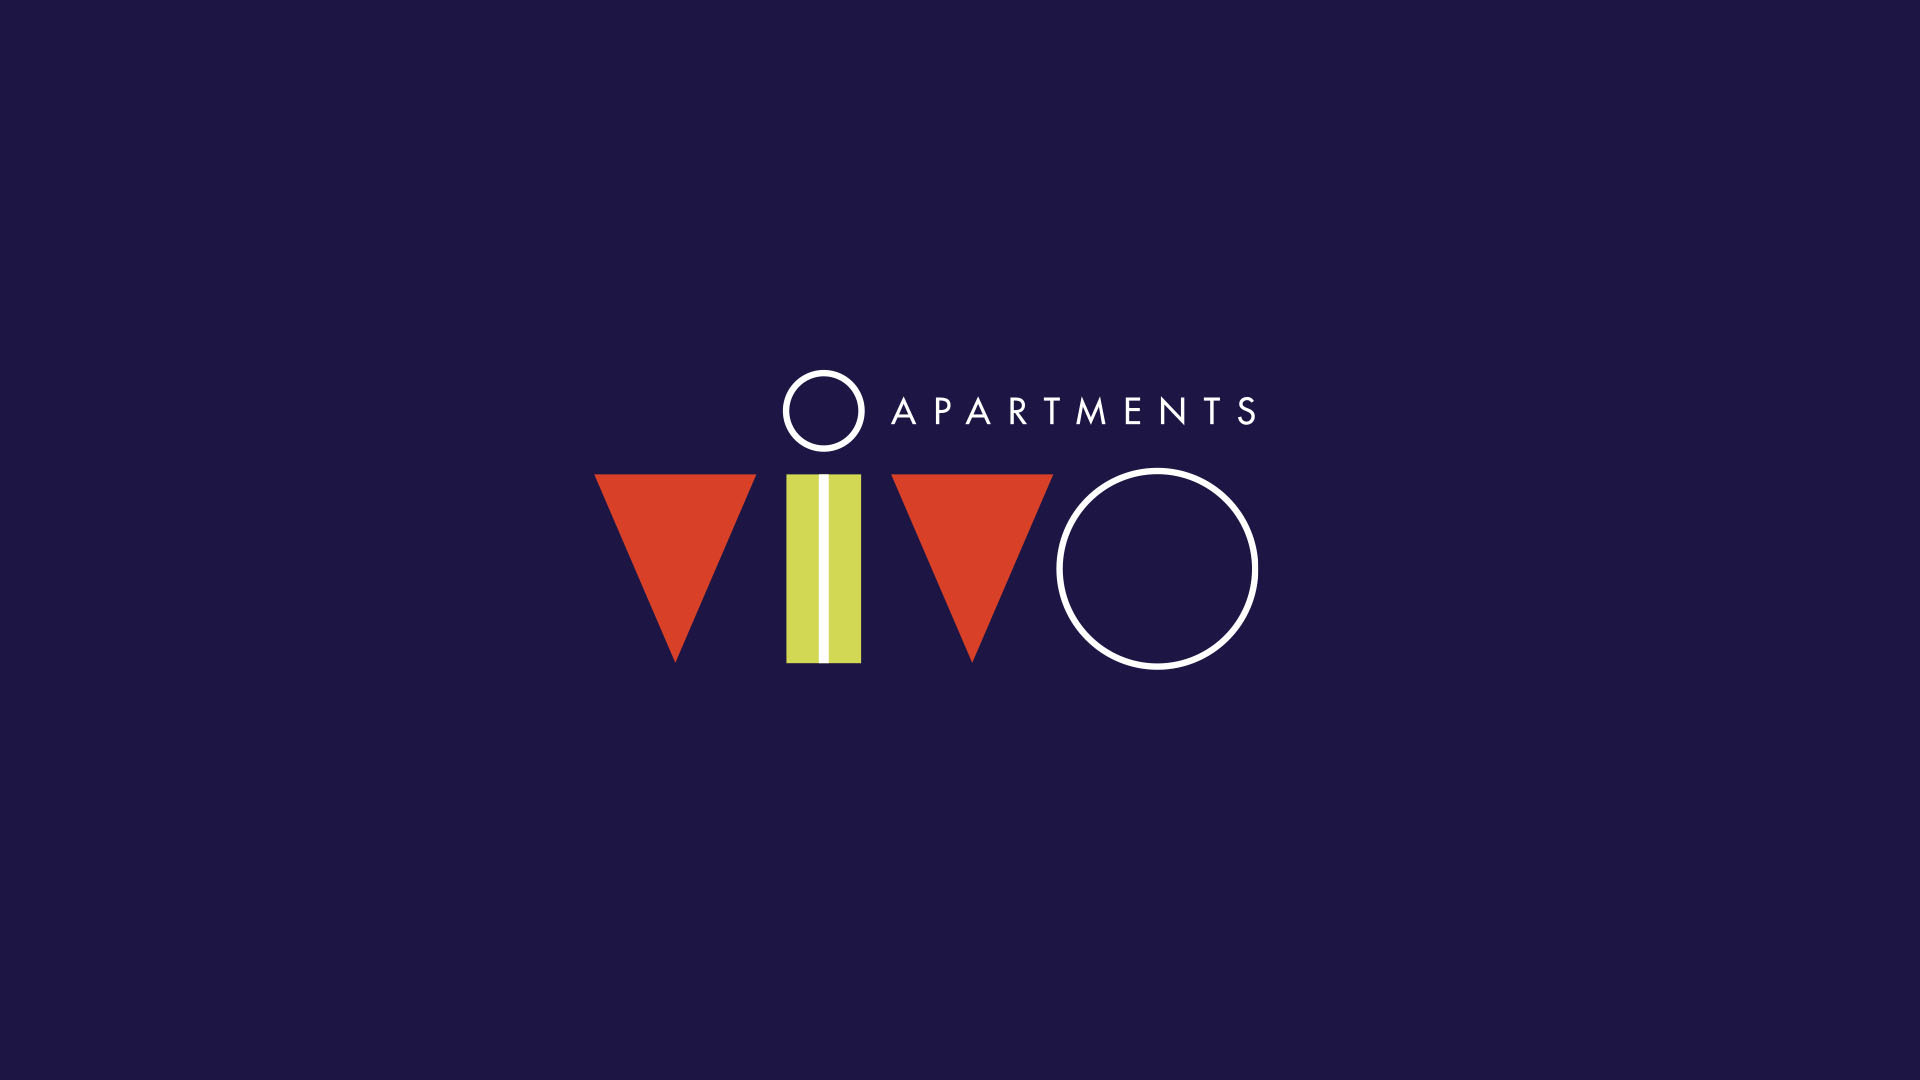 vivo apartments logo on dark blue background